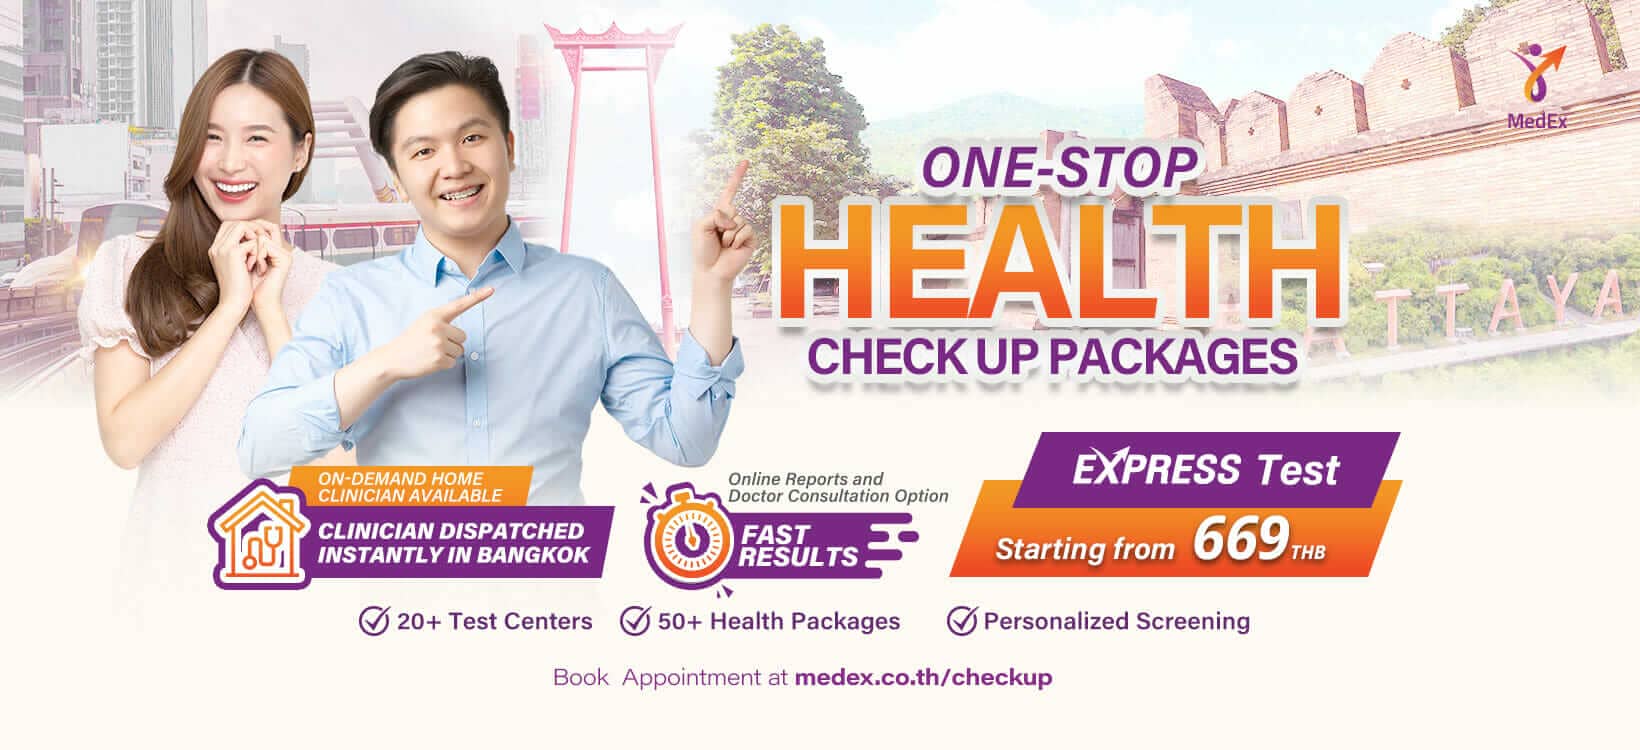 Checkup Packages | Lab Test at Home or 20+ Centers in Bangkok, Pattaya, Phuket, Chiang Mai, Koh Samui and More in Thailand | Express Health Checkup at Home or Lab